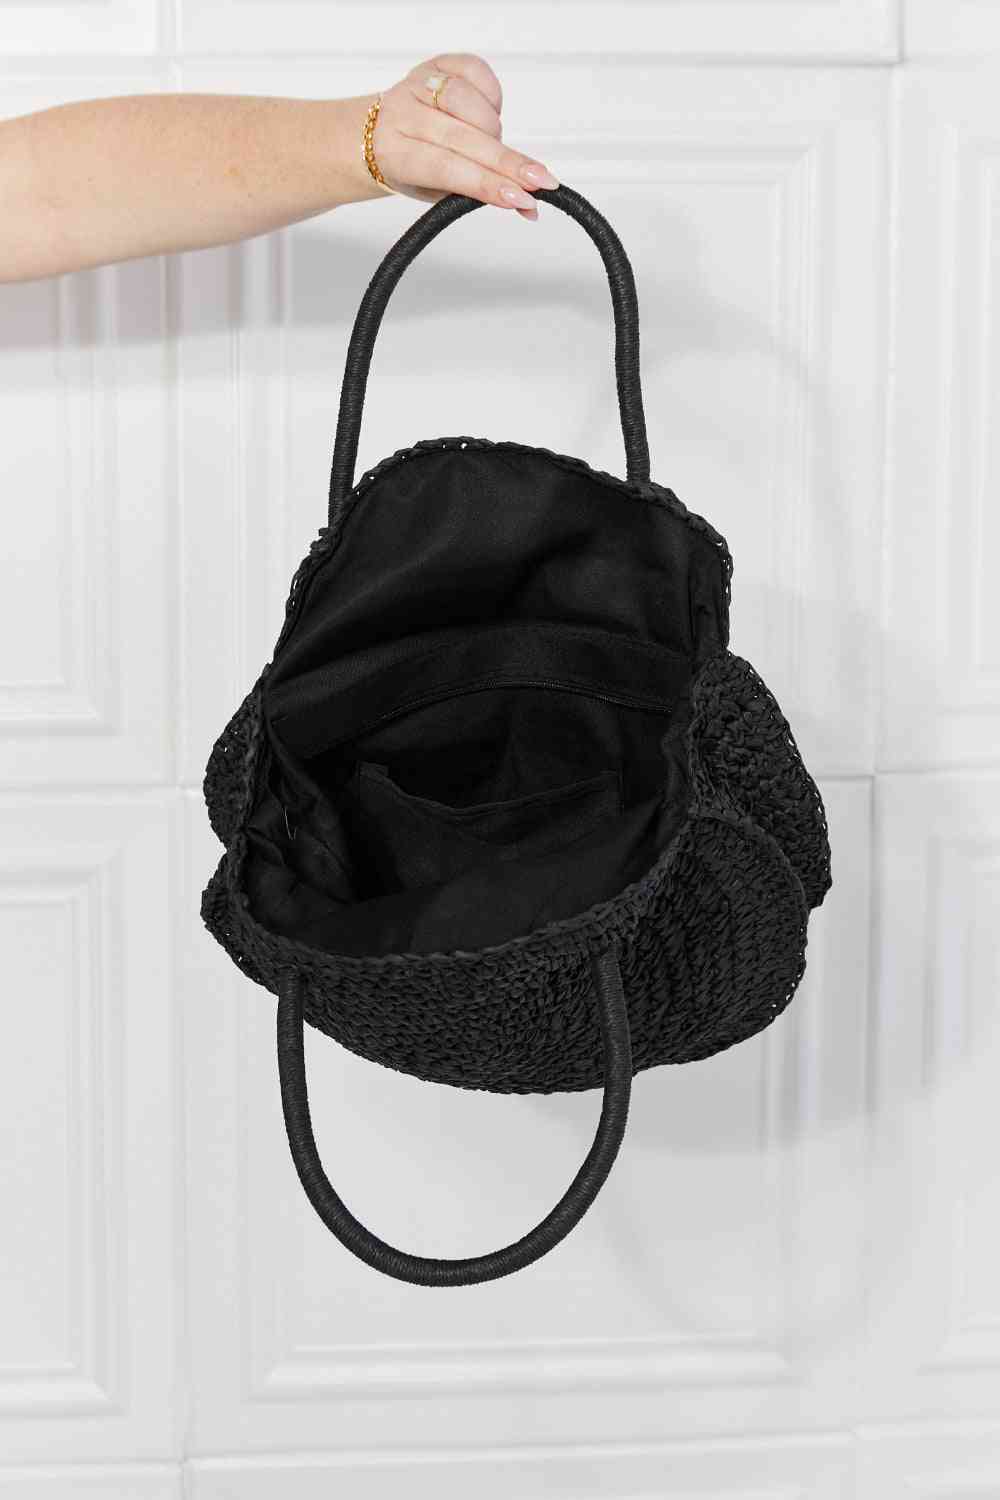 Beach Date Straw Rattan Handbag in Black for Women | Bag | Ro + Ivy